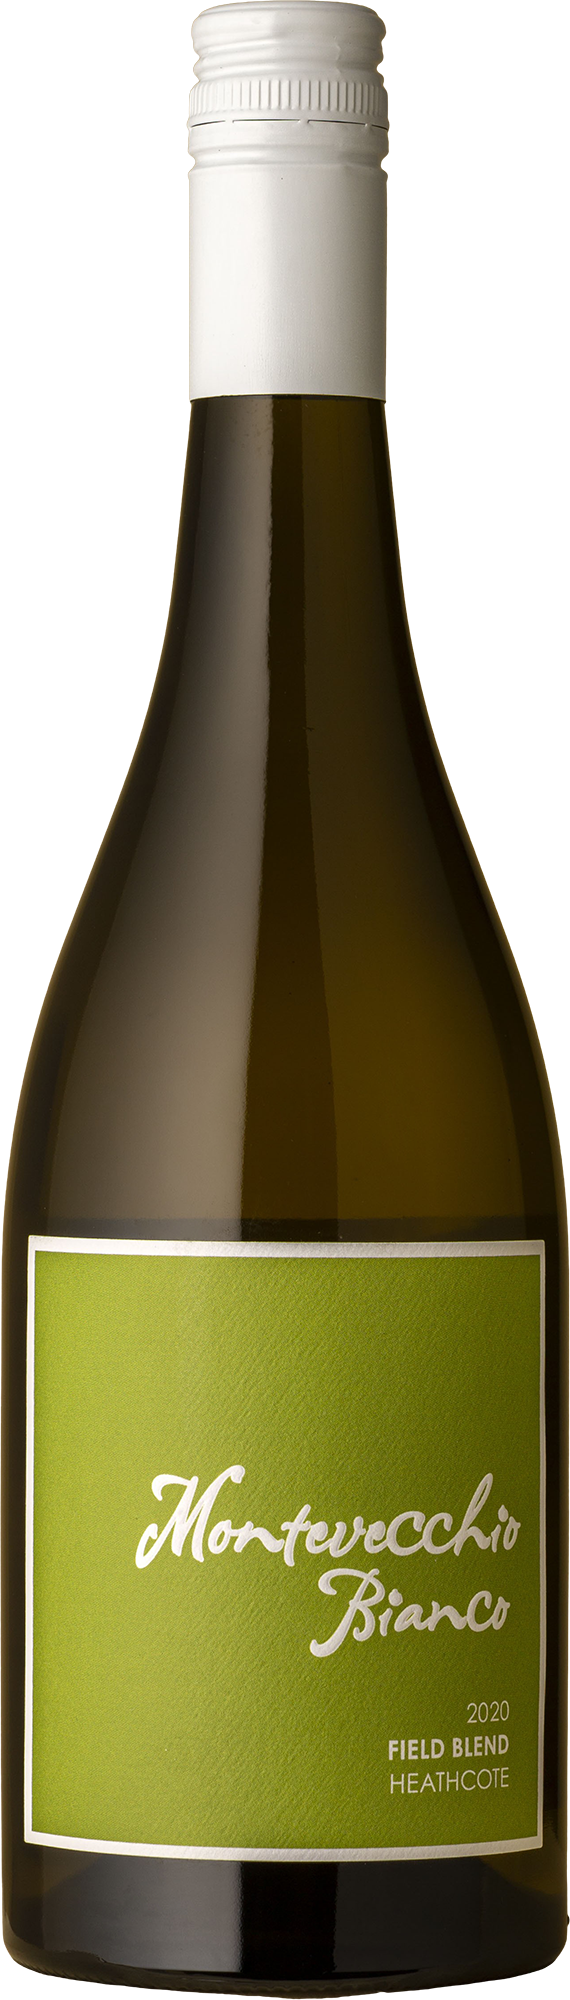 Montevecchio - Bianco 2020 White Wine